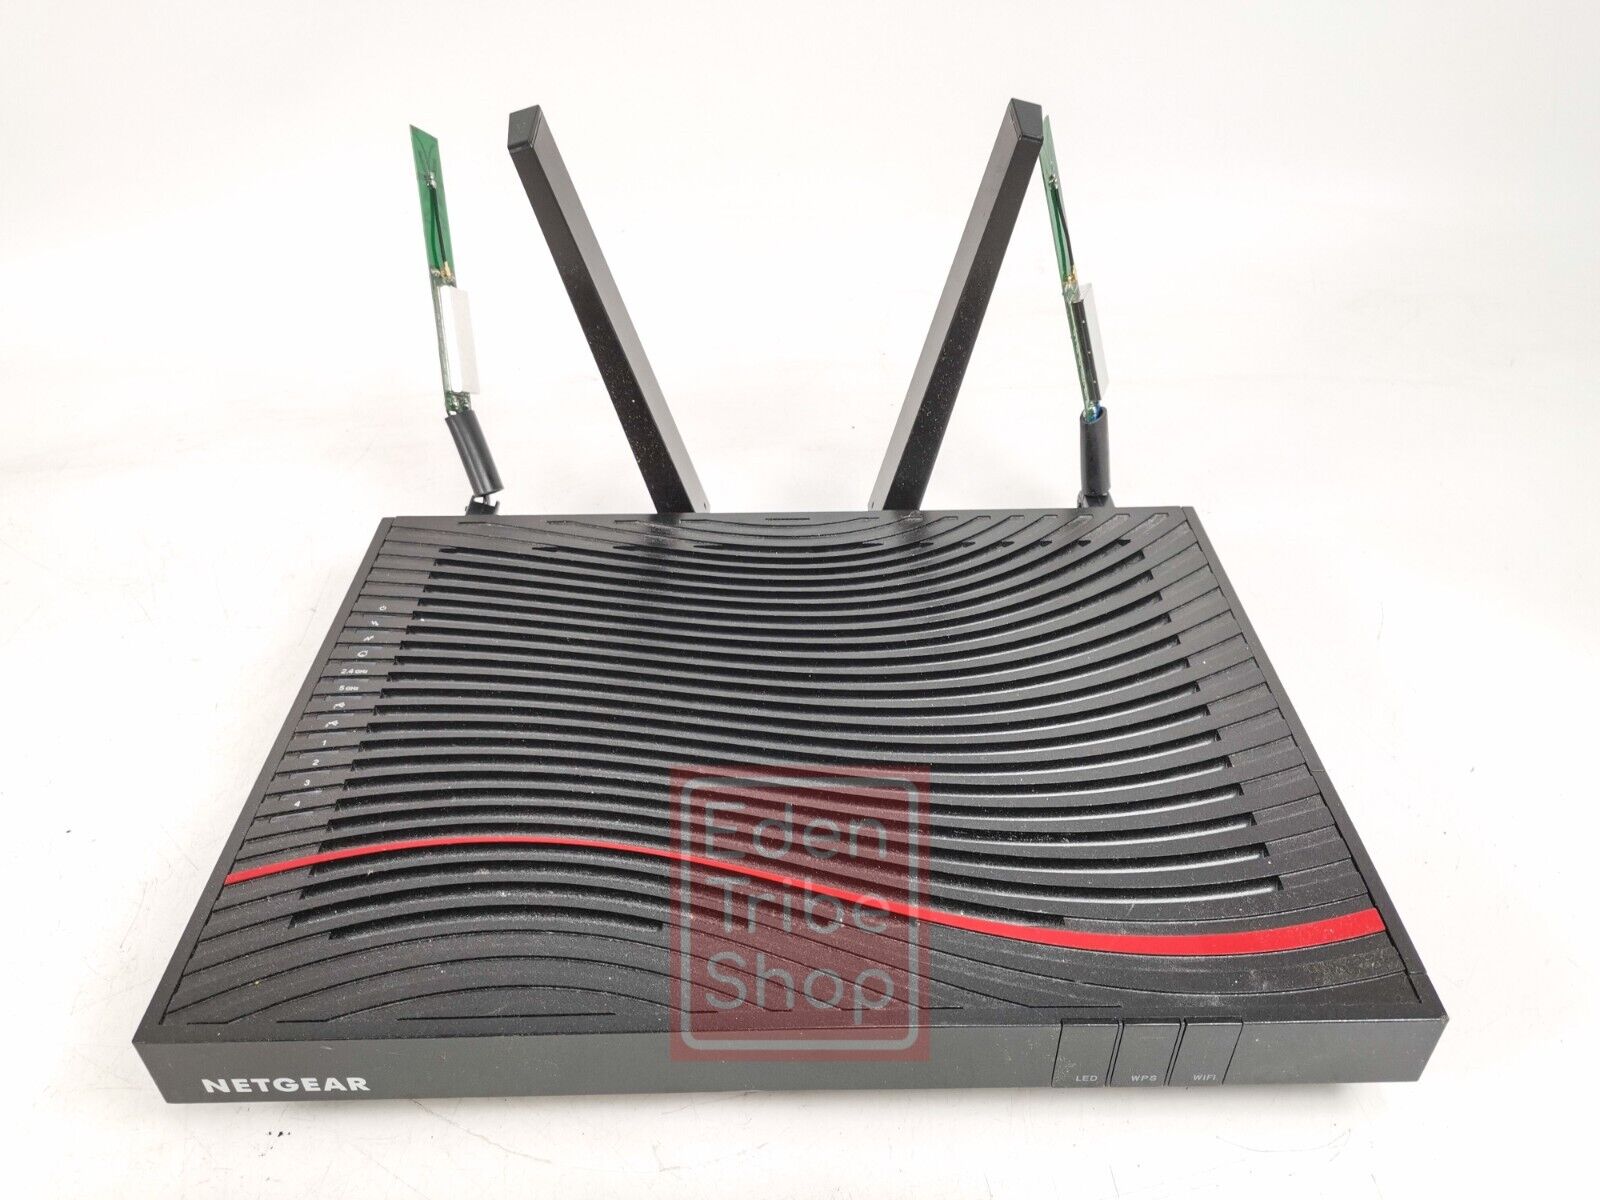 Netgear C7800 Nighthawk X4S AC3200 WiFi Cable Modem Router